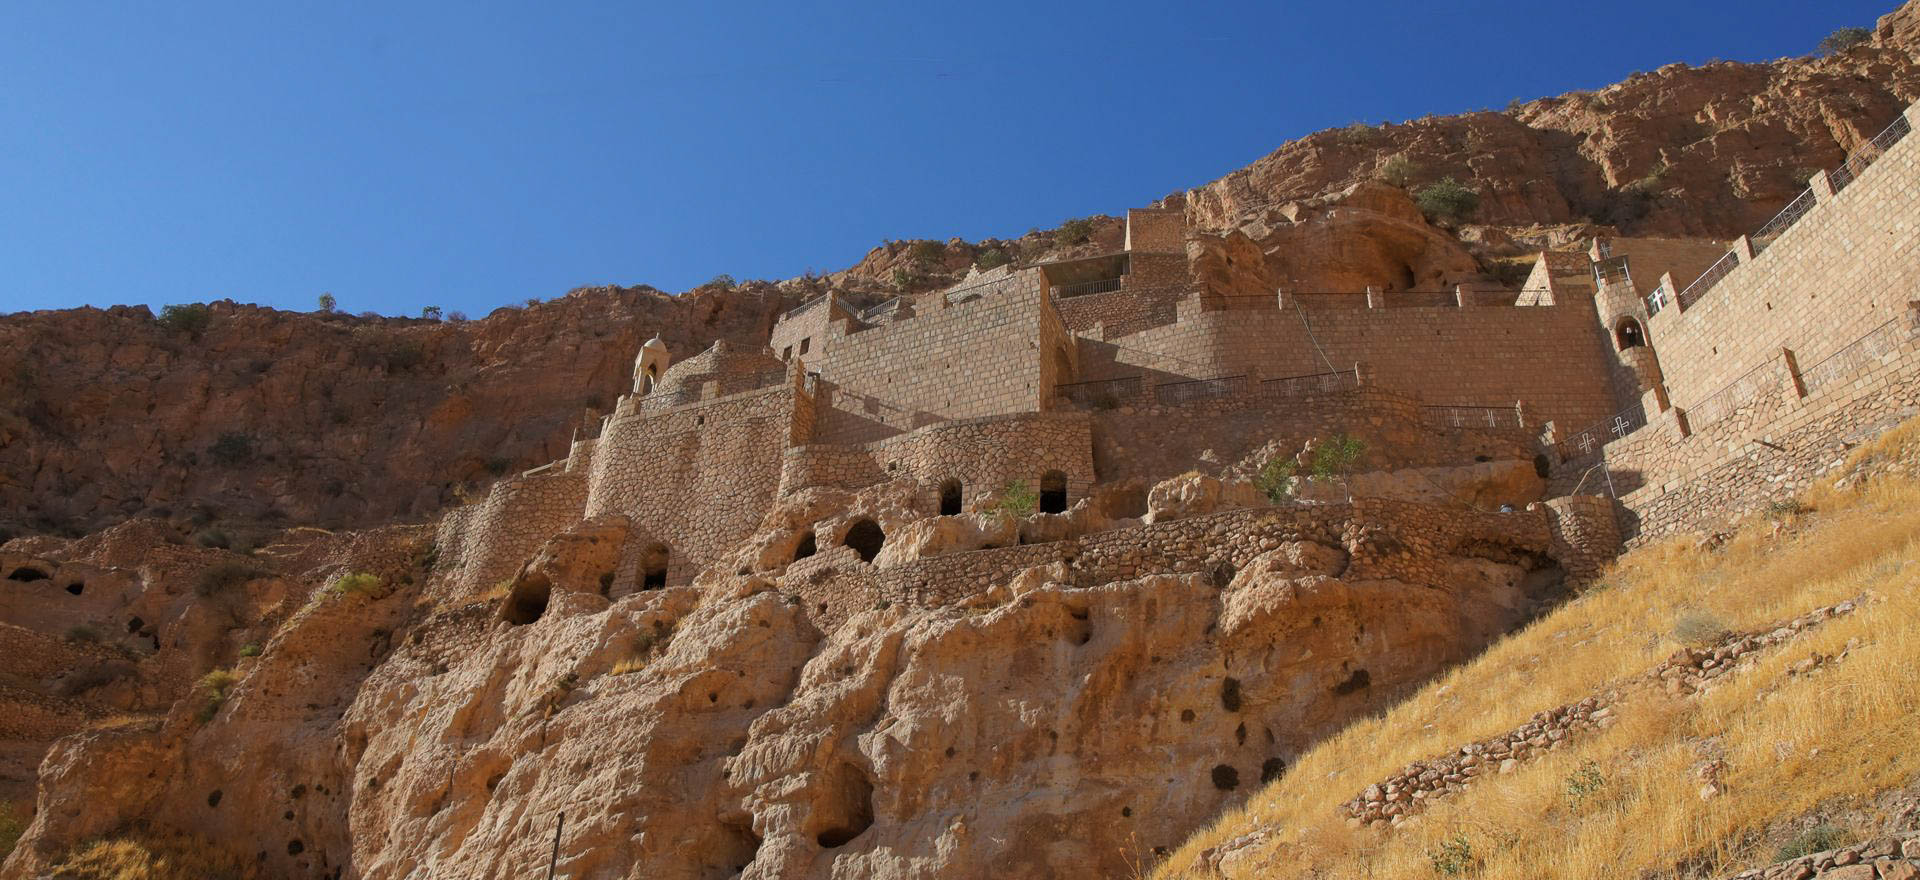 Iraq Holidays and Tours - St Matthew's Monastery in Kurdistan